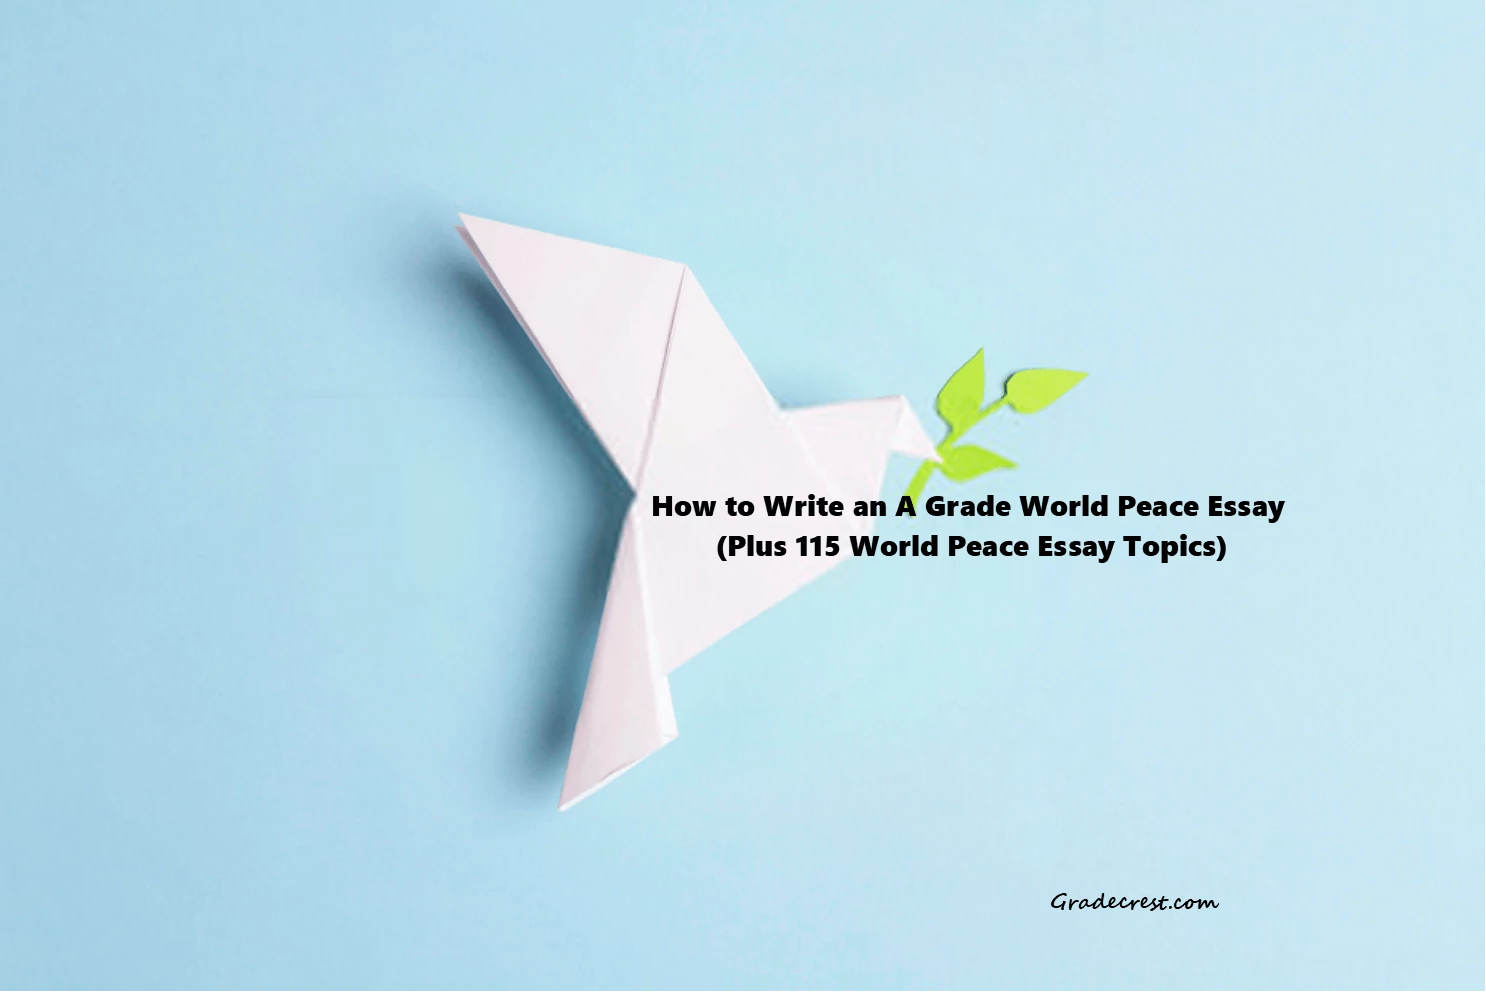 How to write a world peace essay guide